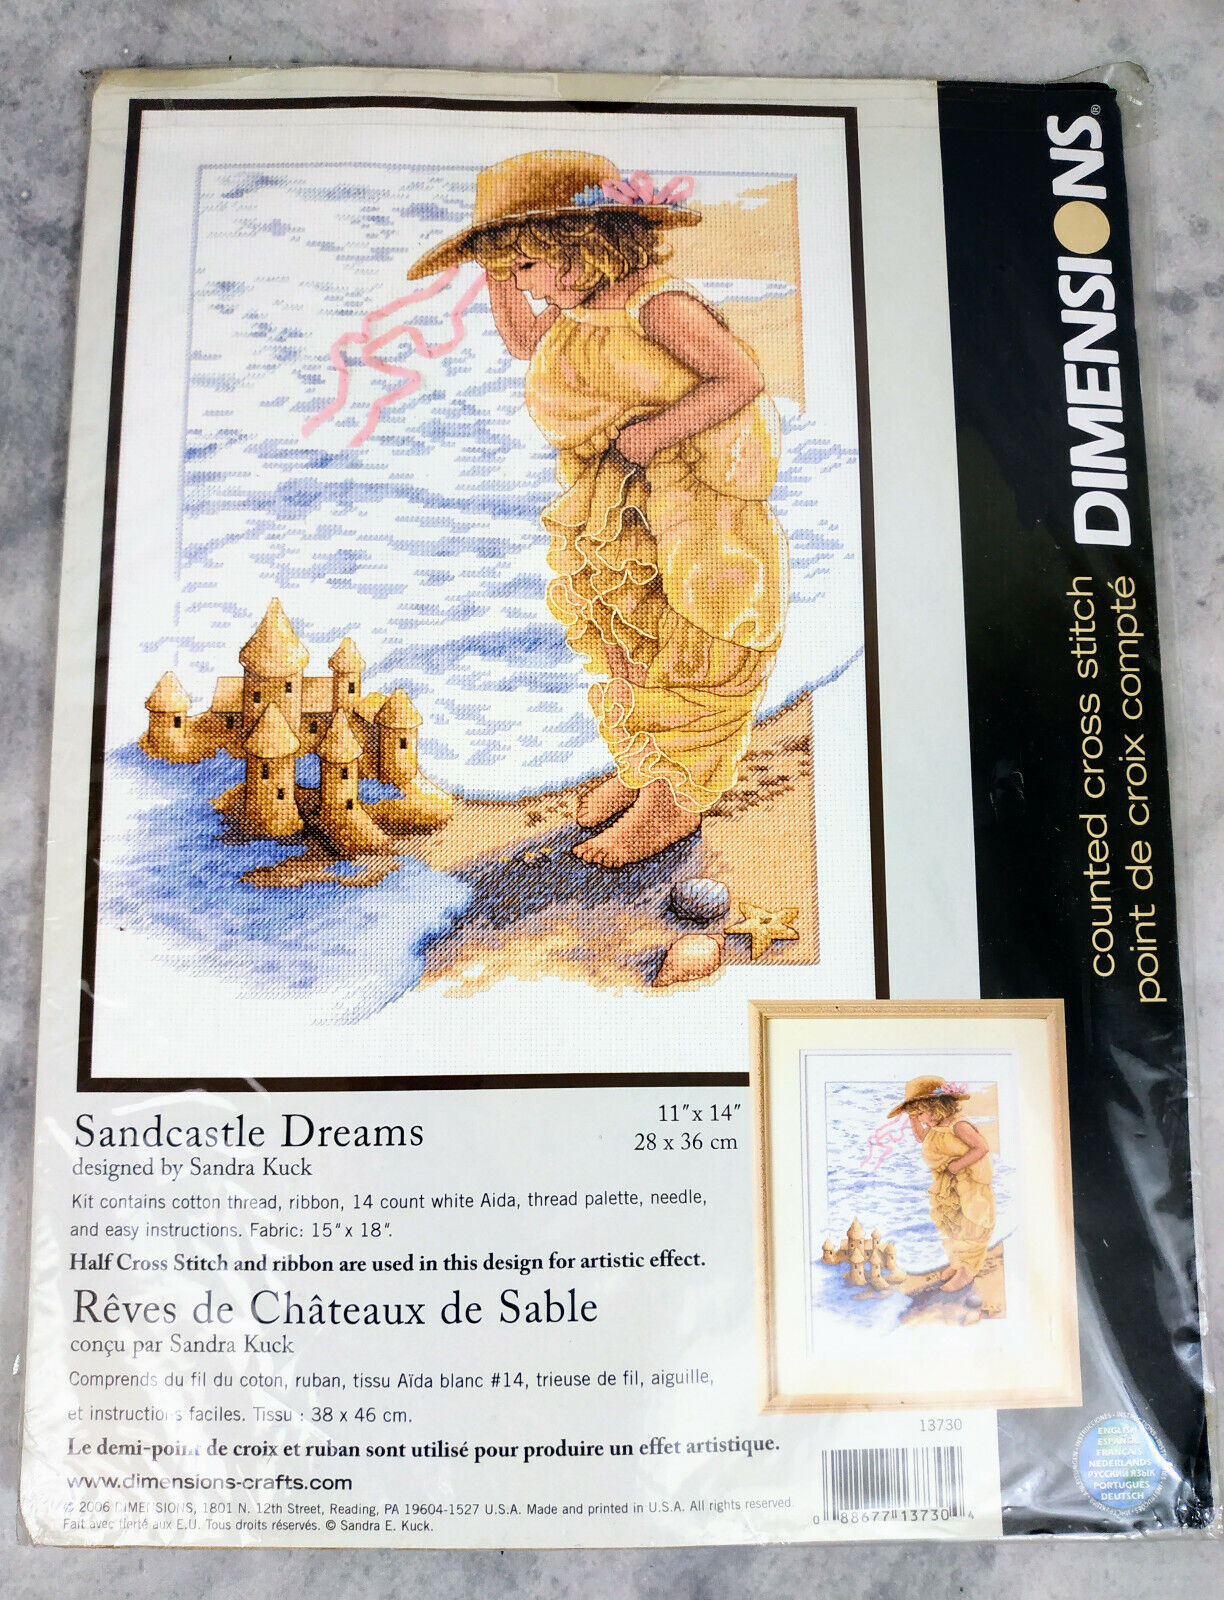 Sandcastle dreams, 13730, 28 x 36 cm